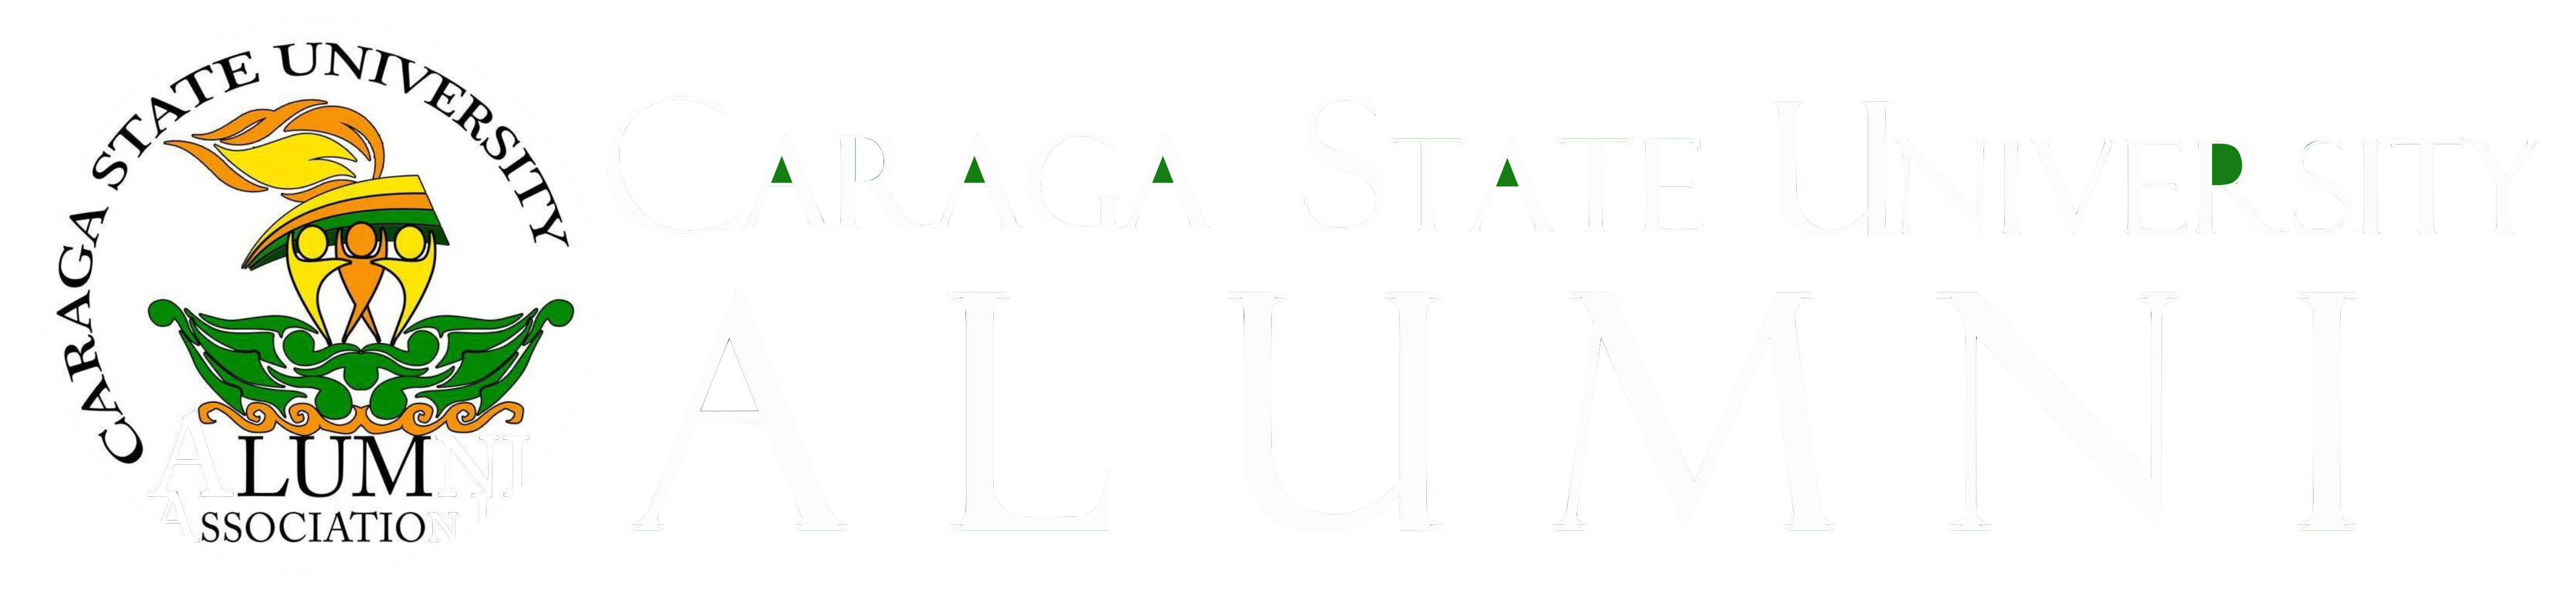 CARAGA STATE UNIVERSITY ALUMNI ASSOCIATION